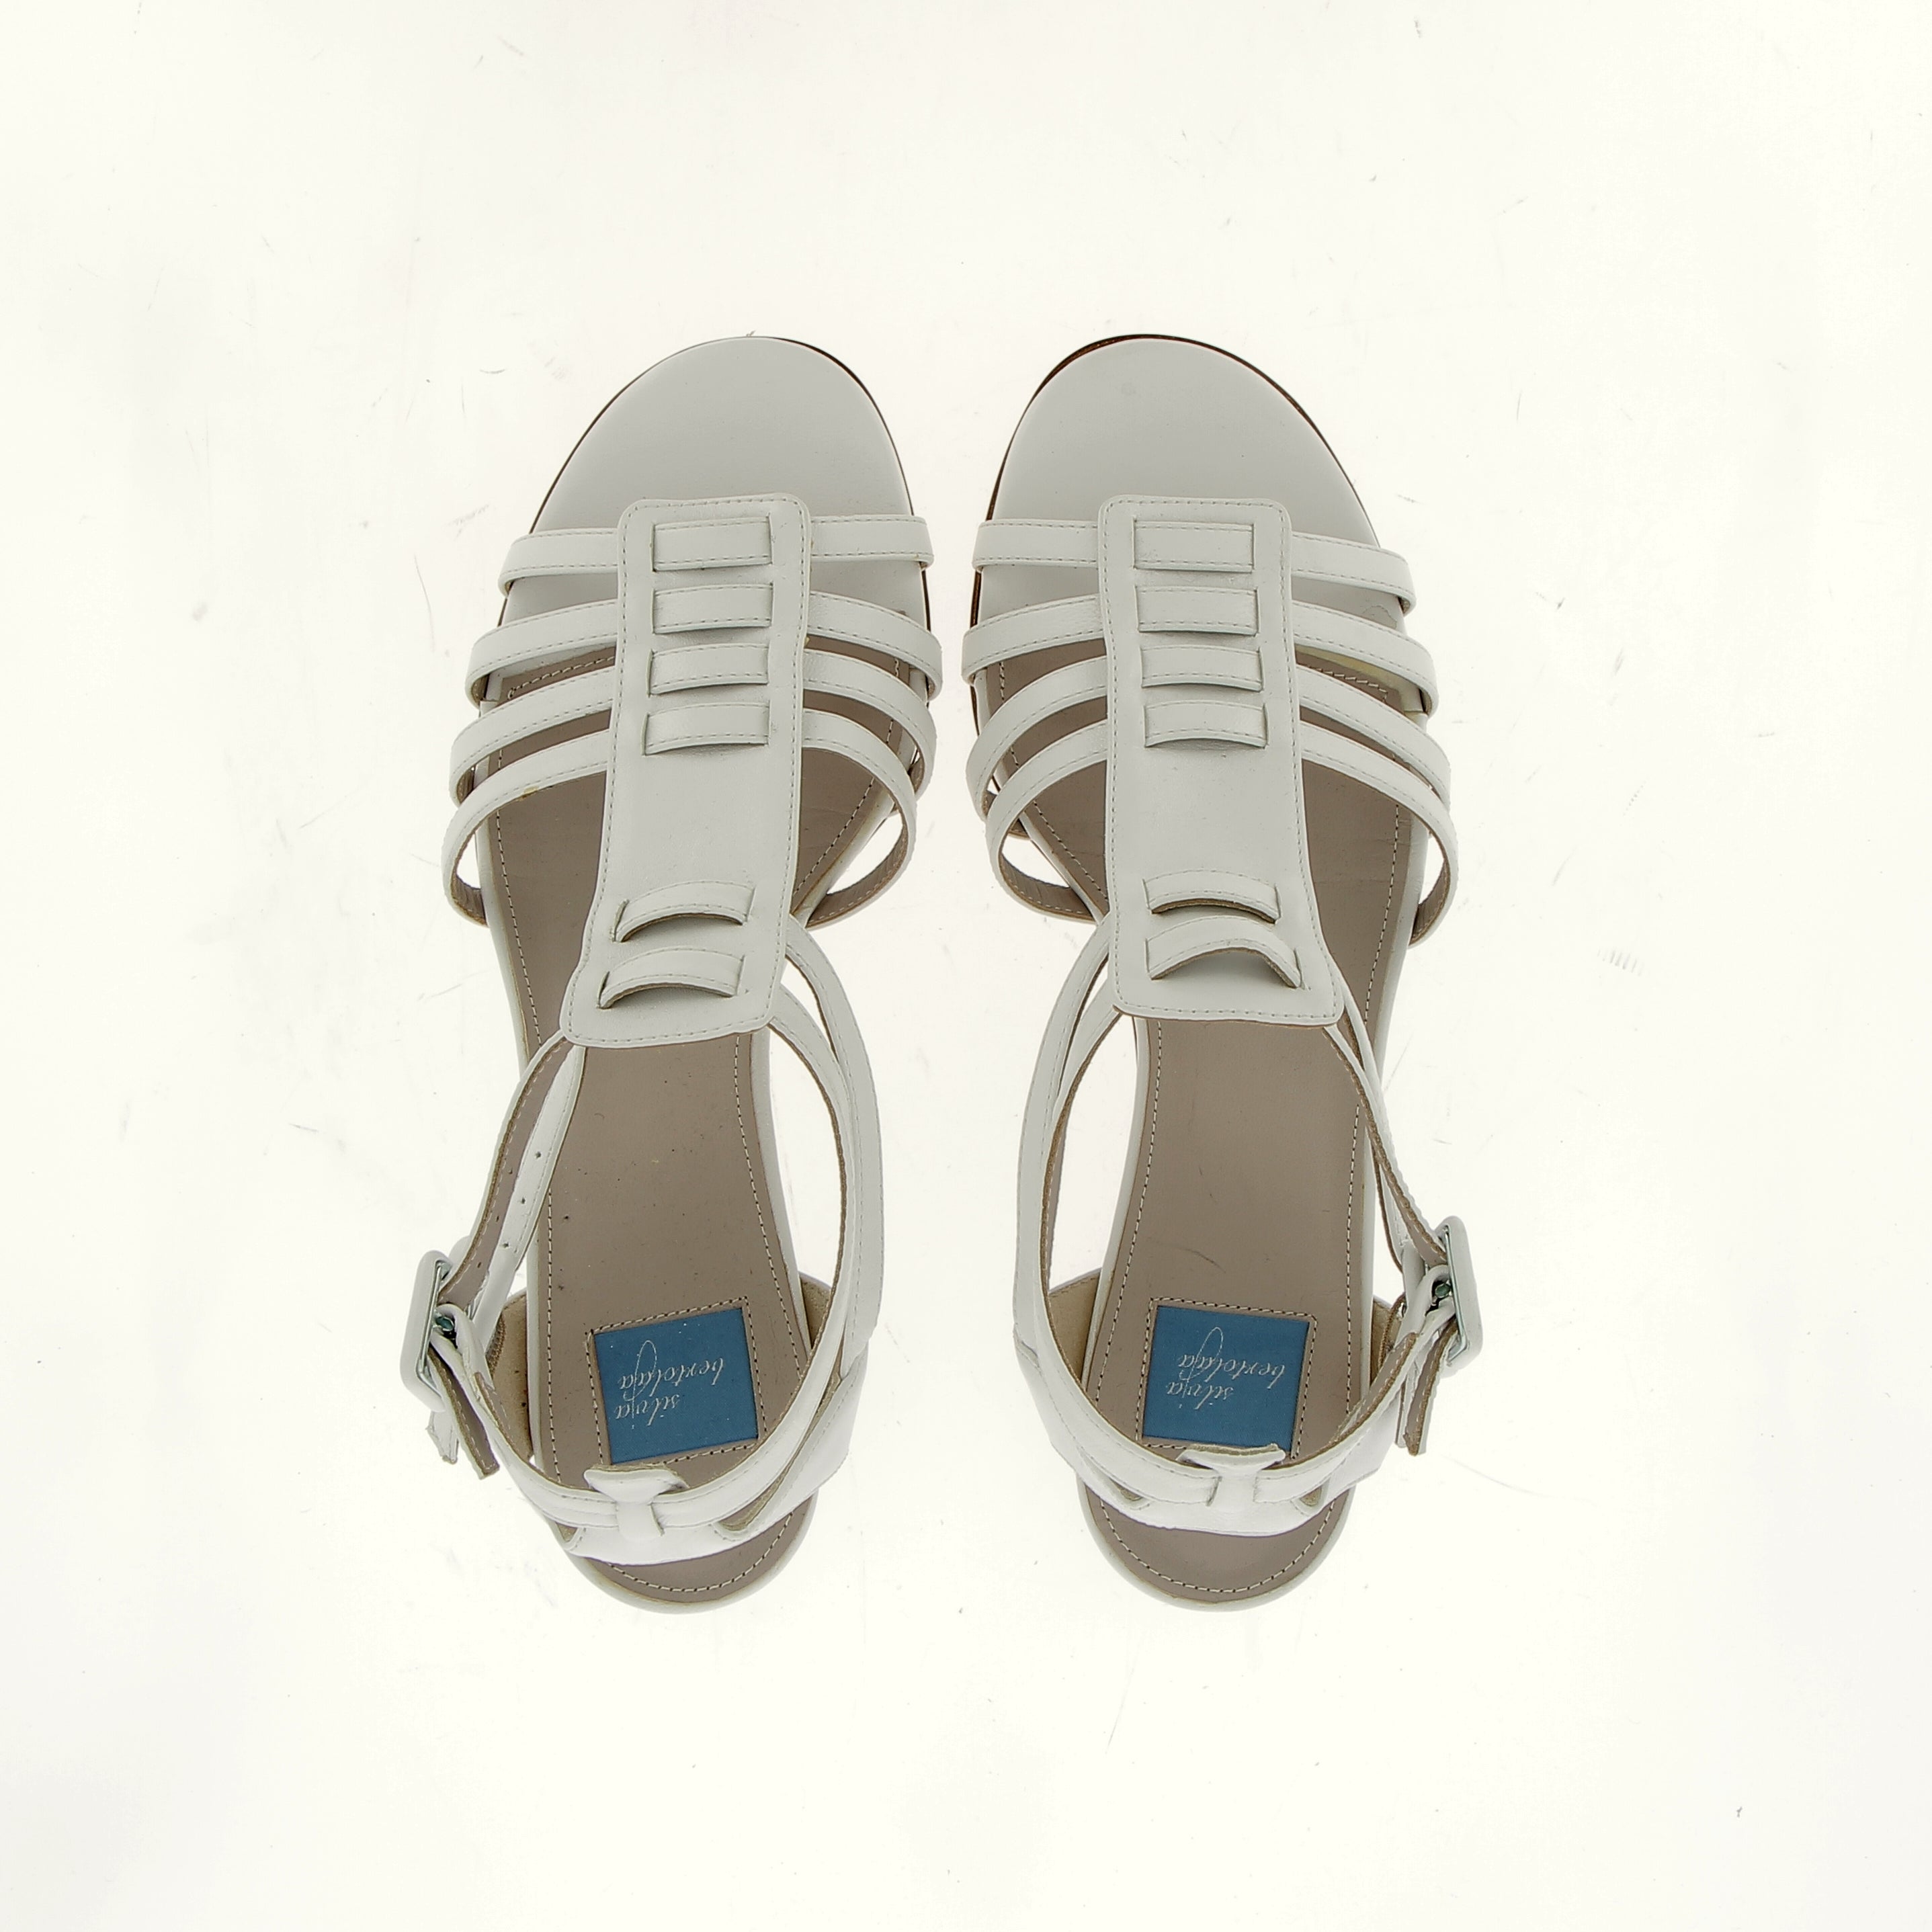 Gladiator sandal on White nappa leather heel